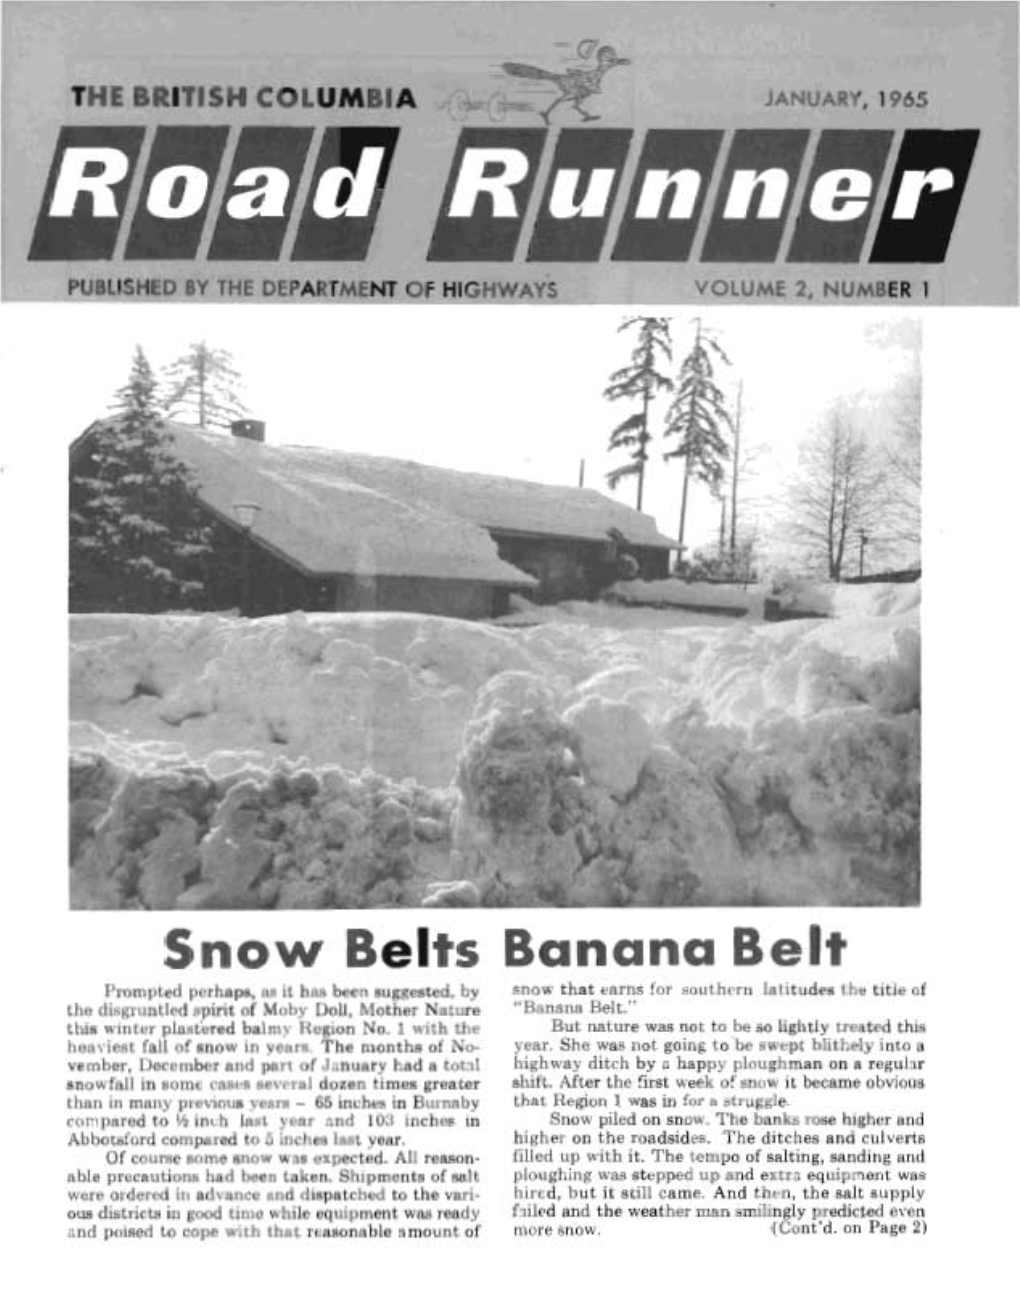 The British Columbia Road Runner, January 1965, Volume 2, Number 1